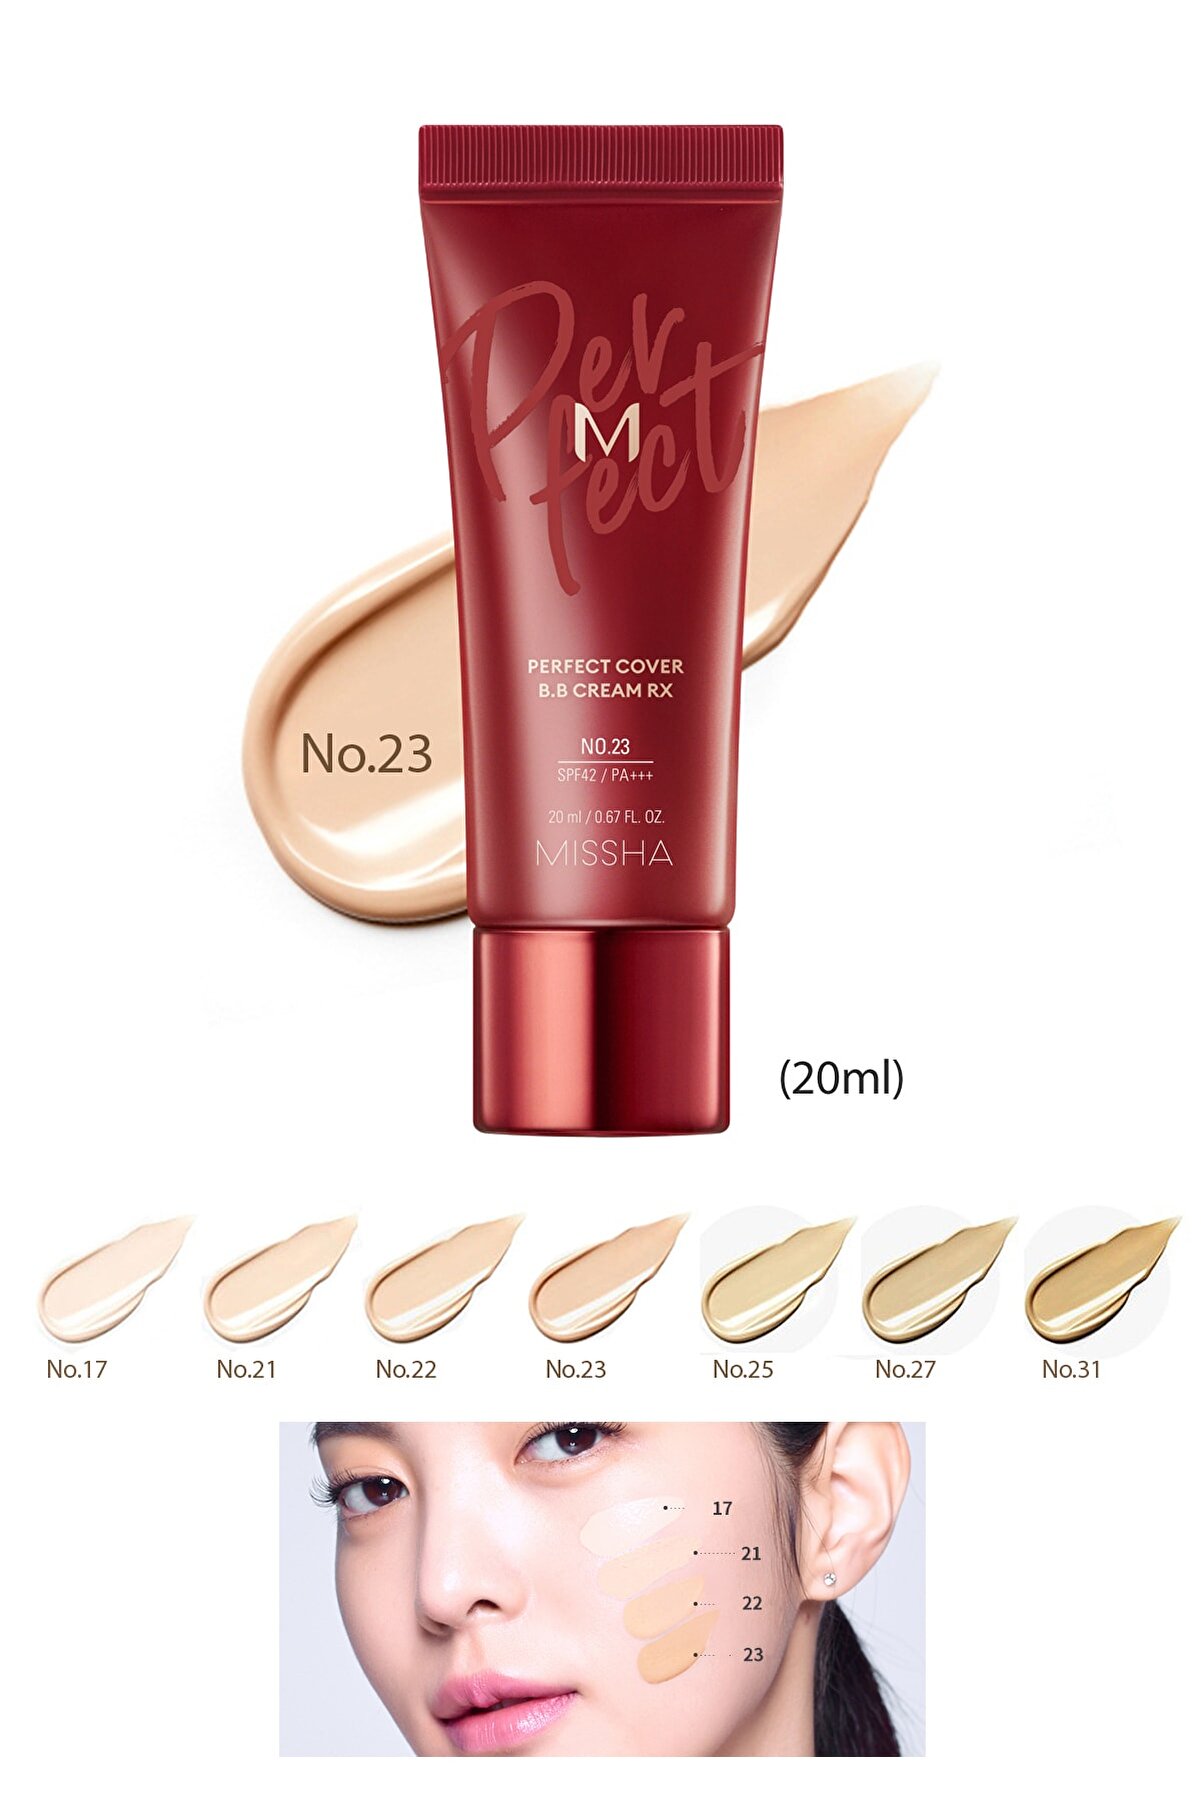 Missha Yüksek Kapatıcı Ve Cilt Bakım Etkili Yeni Nesil Bb Krem Spf42+++ M Perfect Cover Bb Cream Rx (no.23)